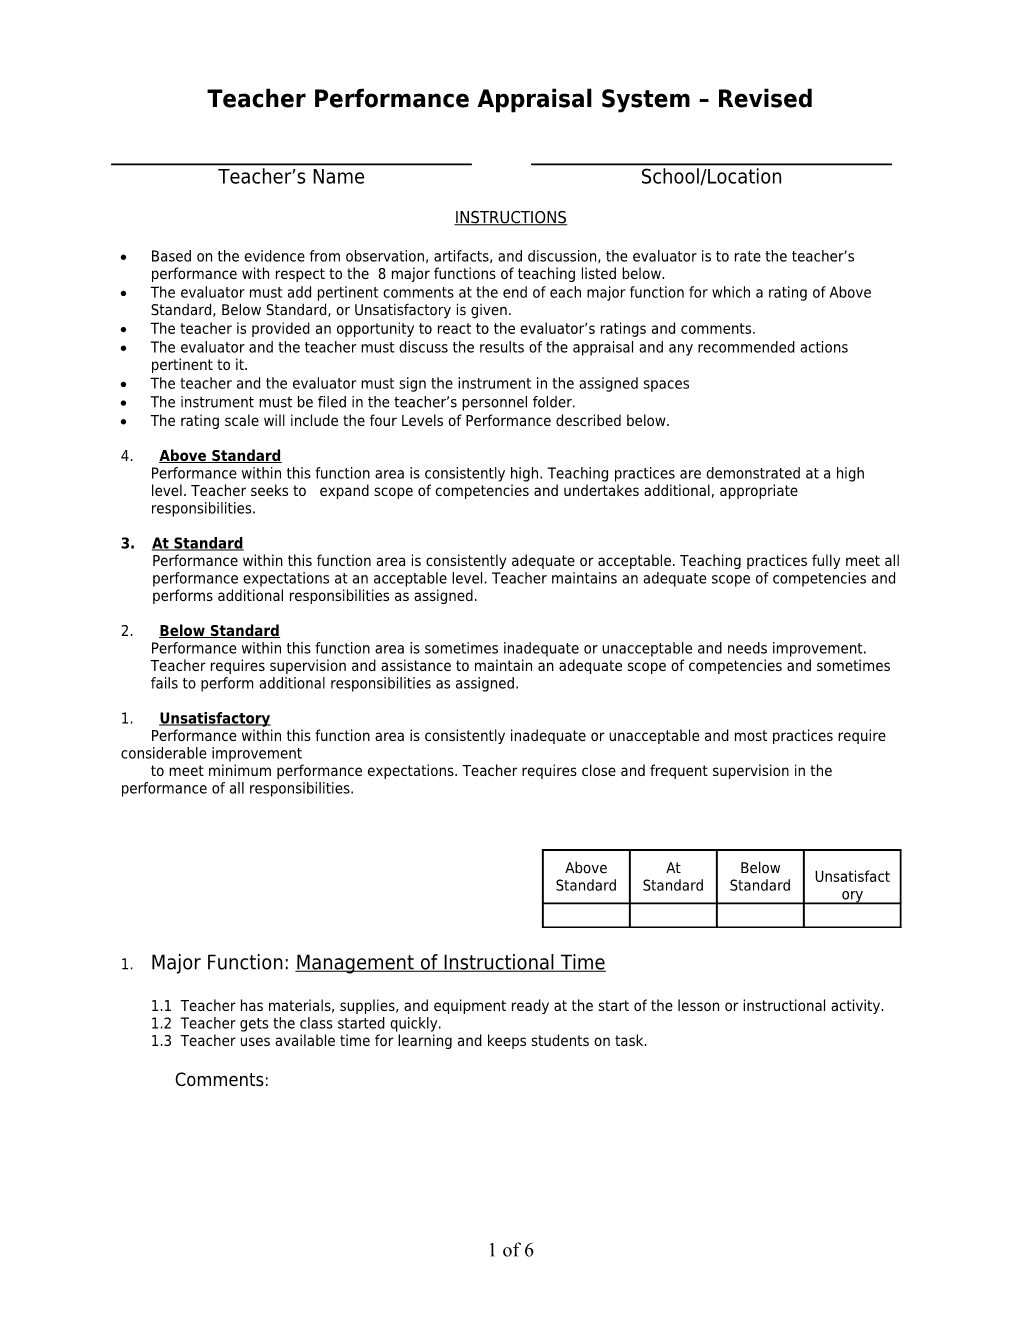 Teacher Performance Appraisal System Revised